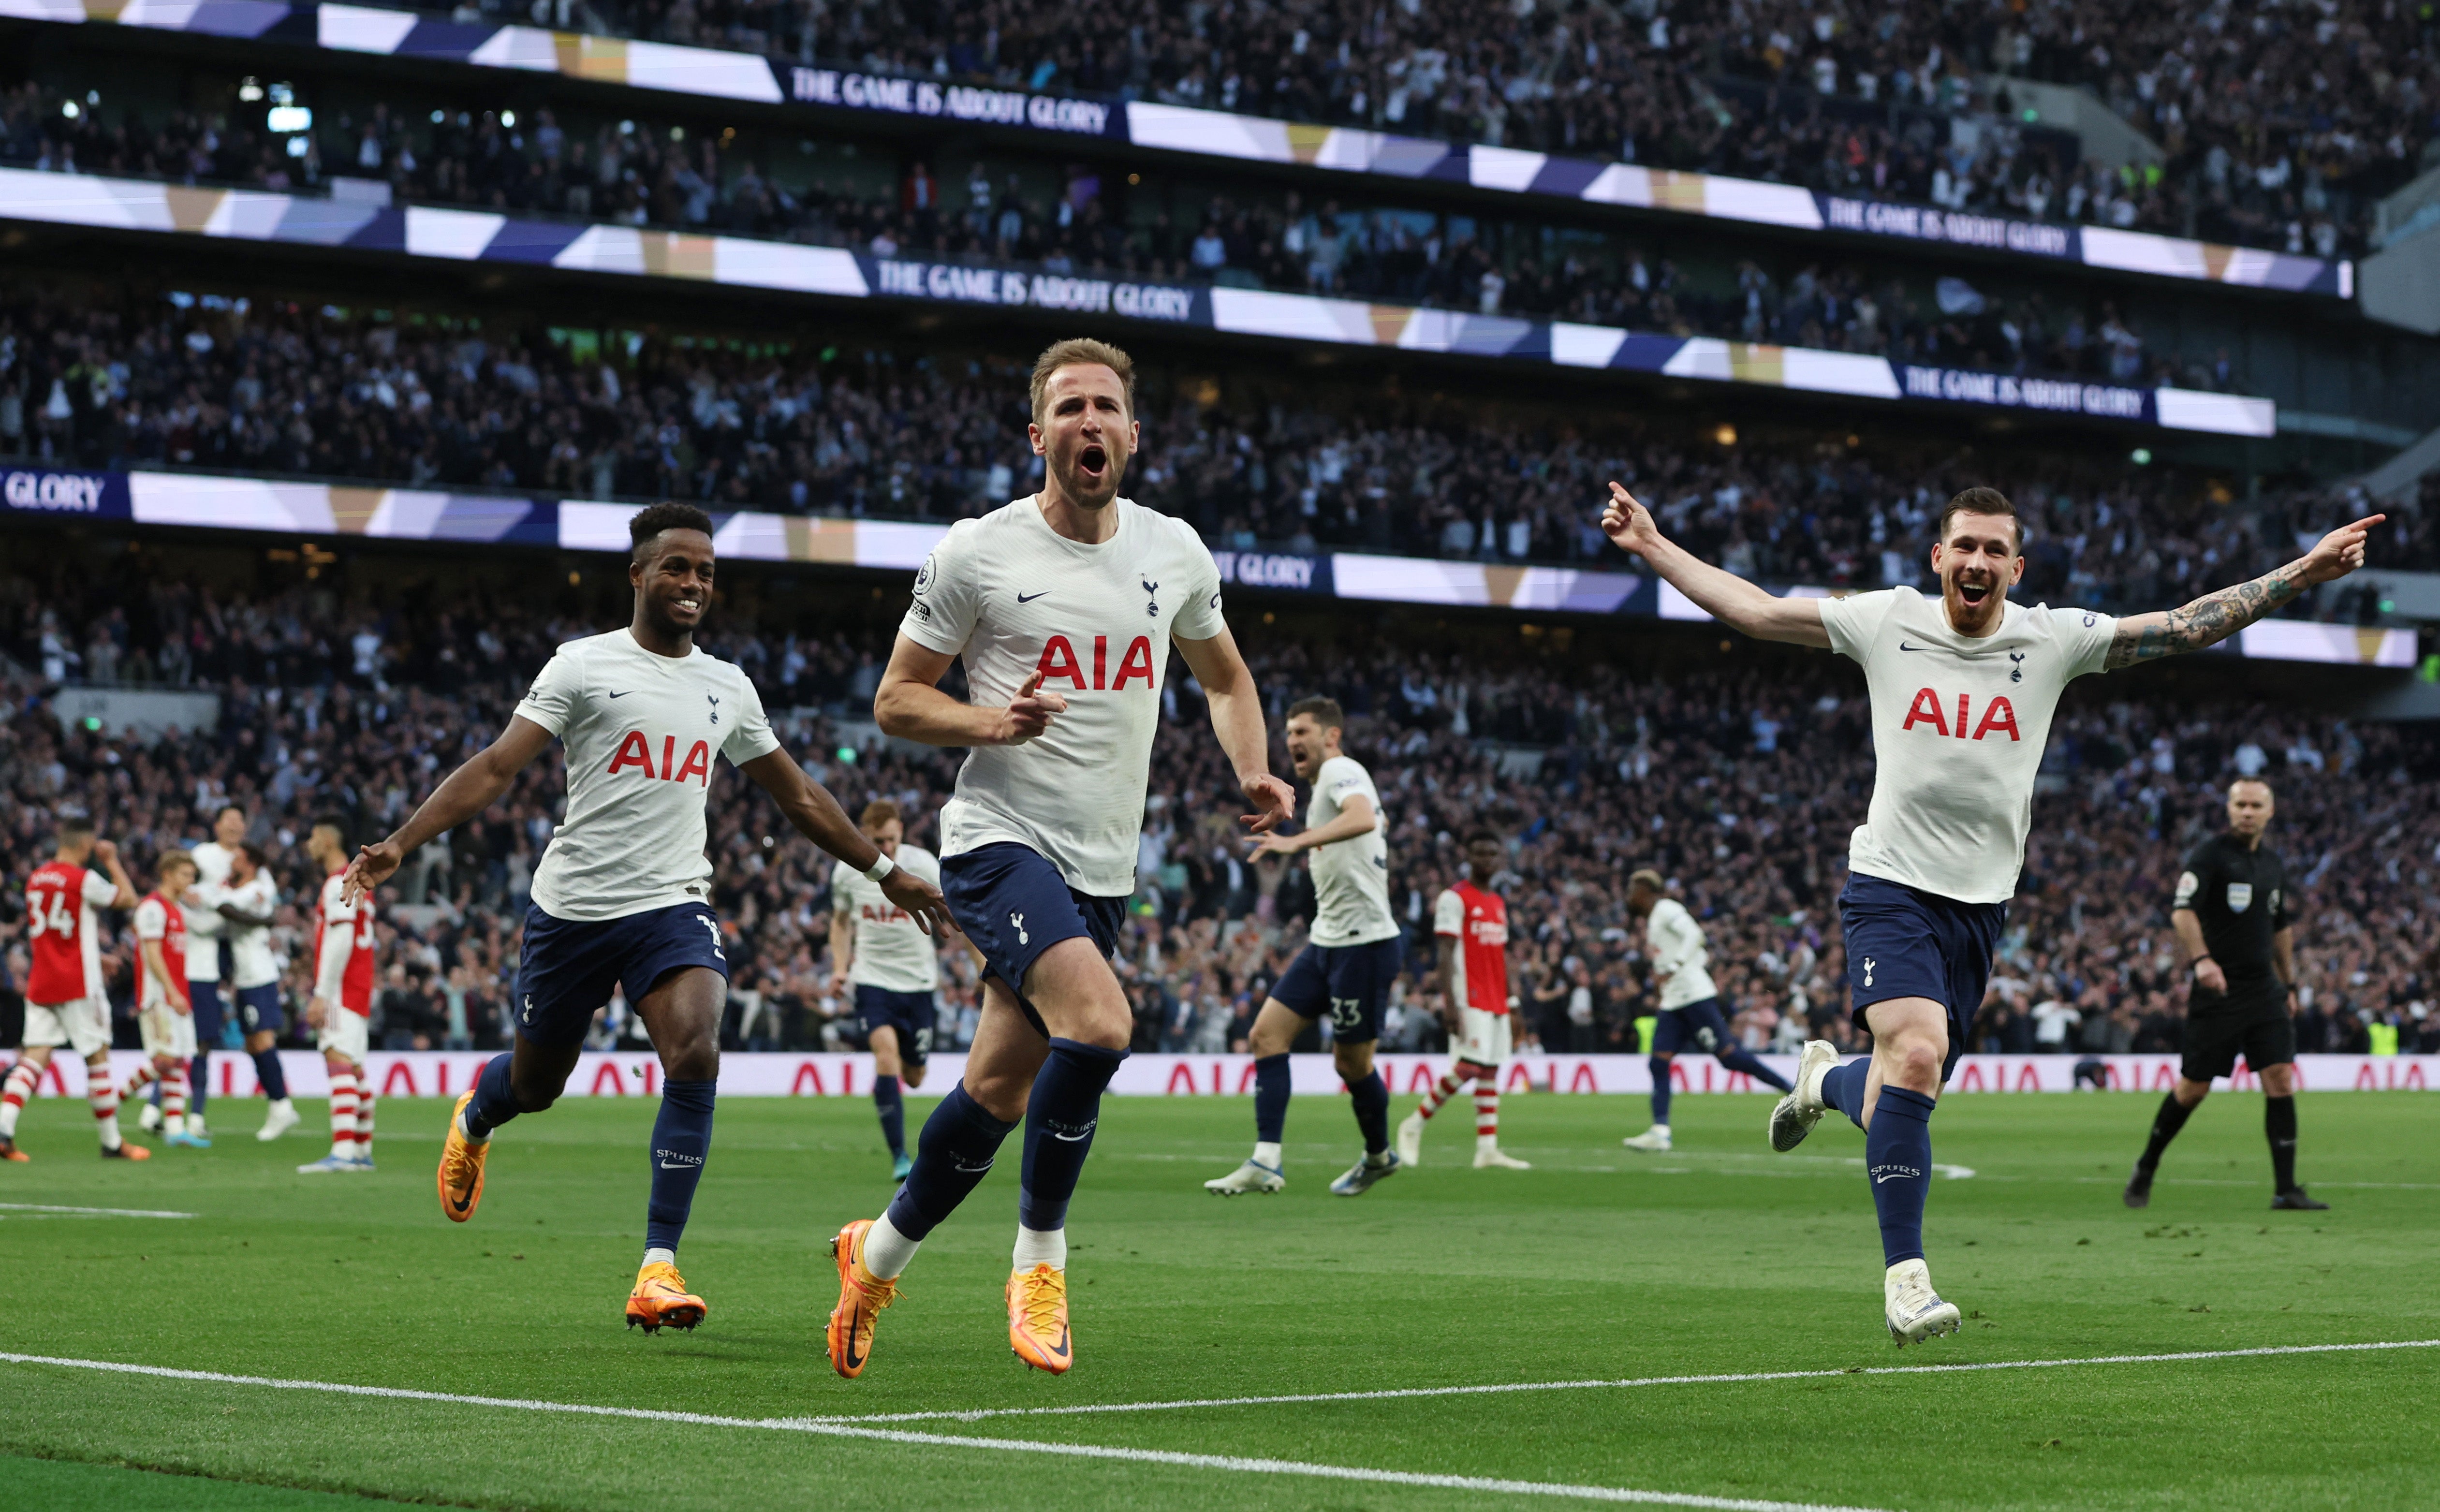 Tottenham Hotspur's Harry Kane celebrates scoring their second goal